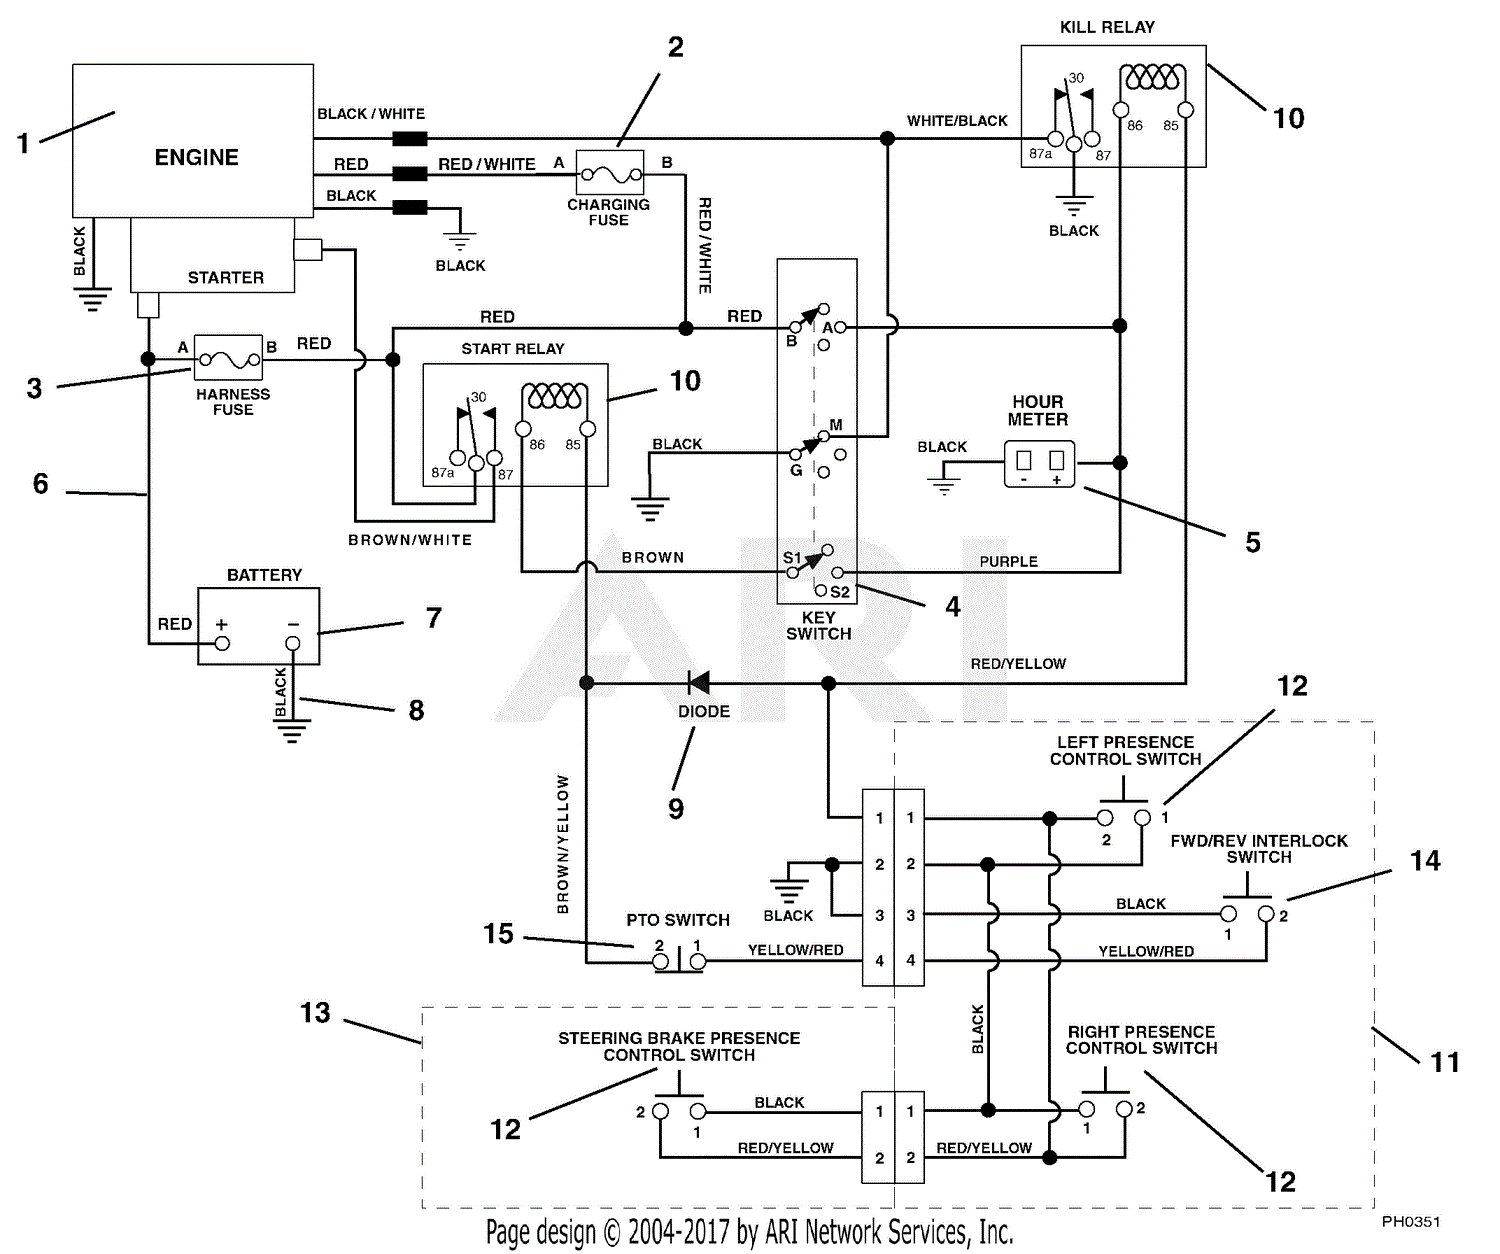 Kohler Command 12.5 Wiring Diagram from az417944.vo.msecnd.net